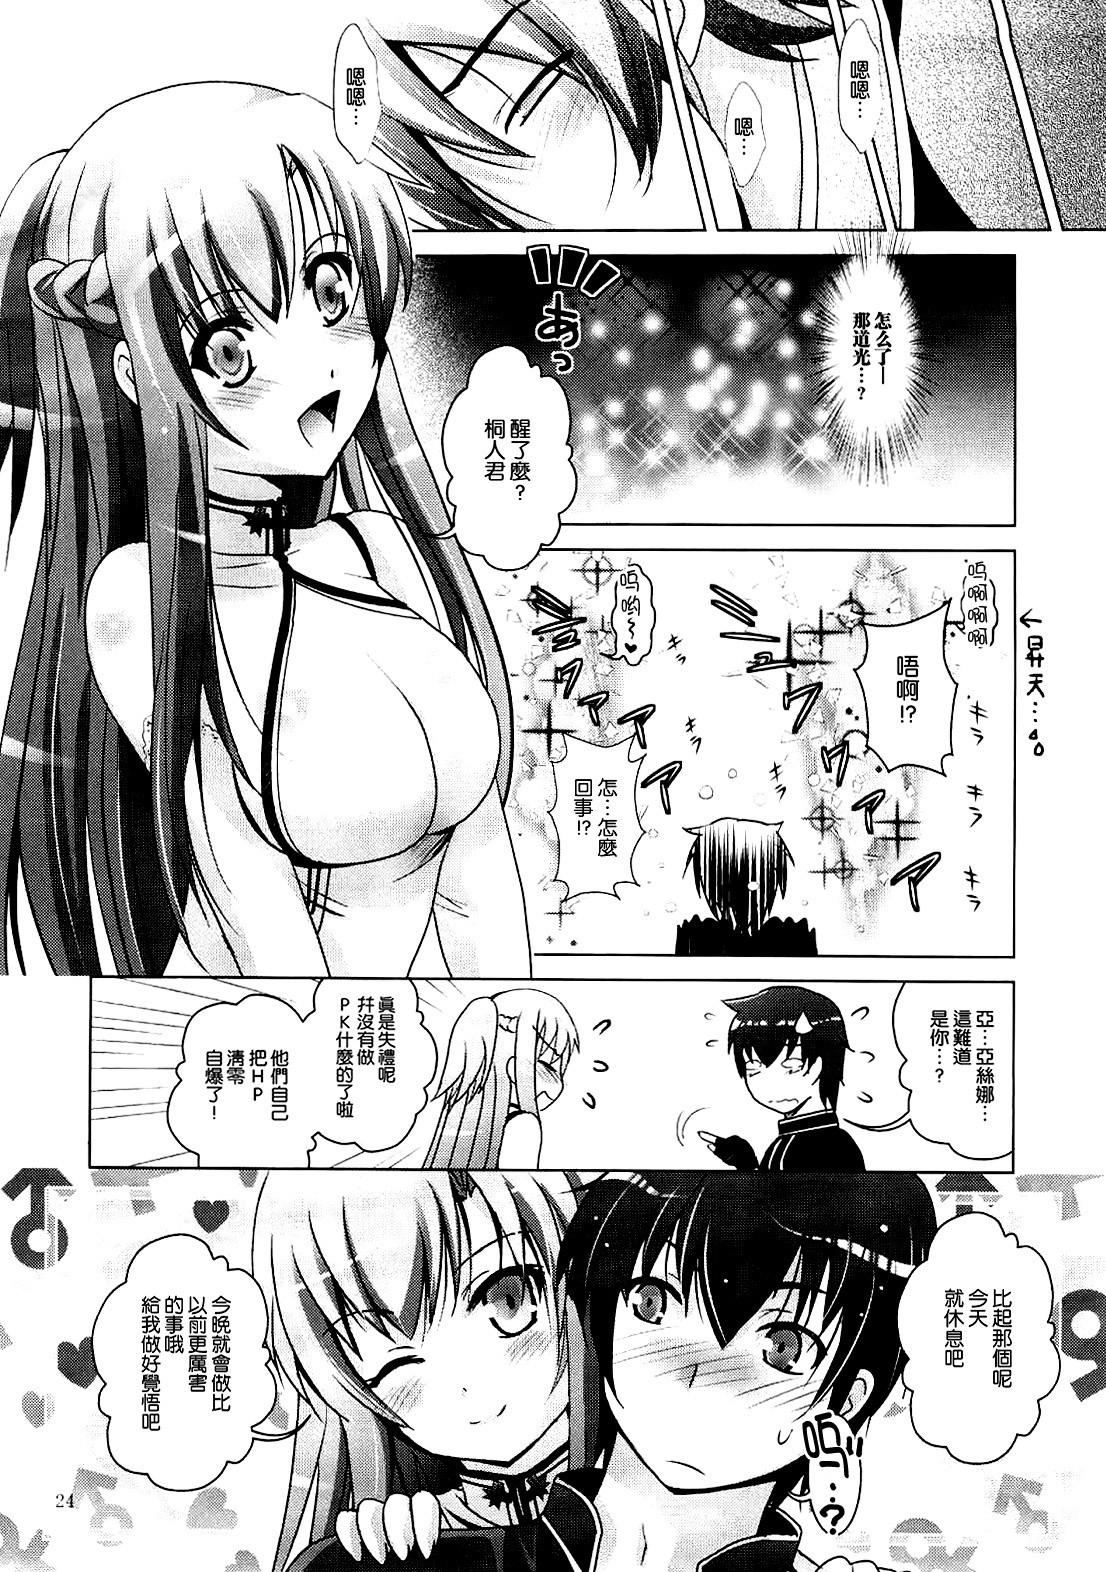 MOUSOU THEATER 35 hentai manga picture 21